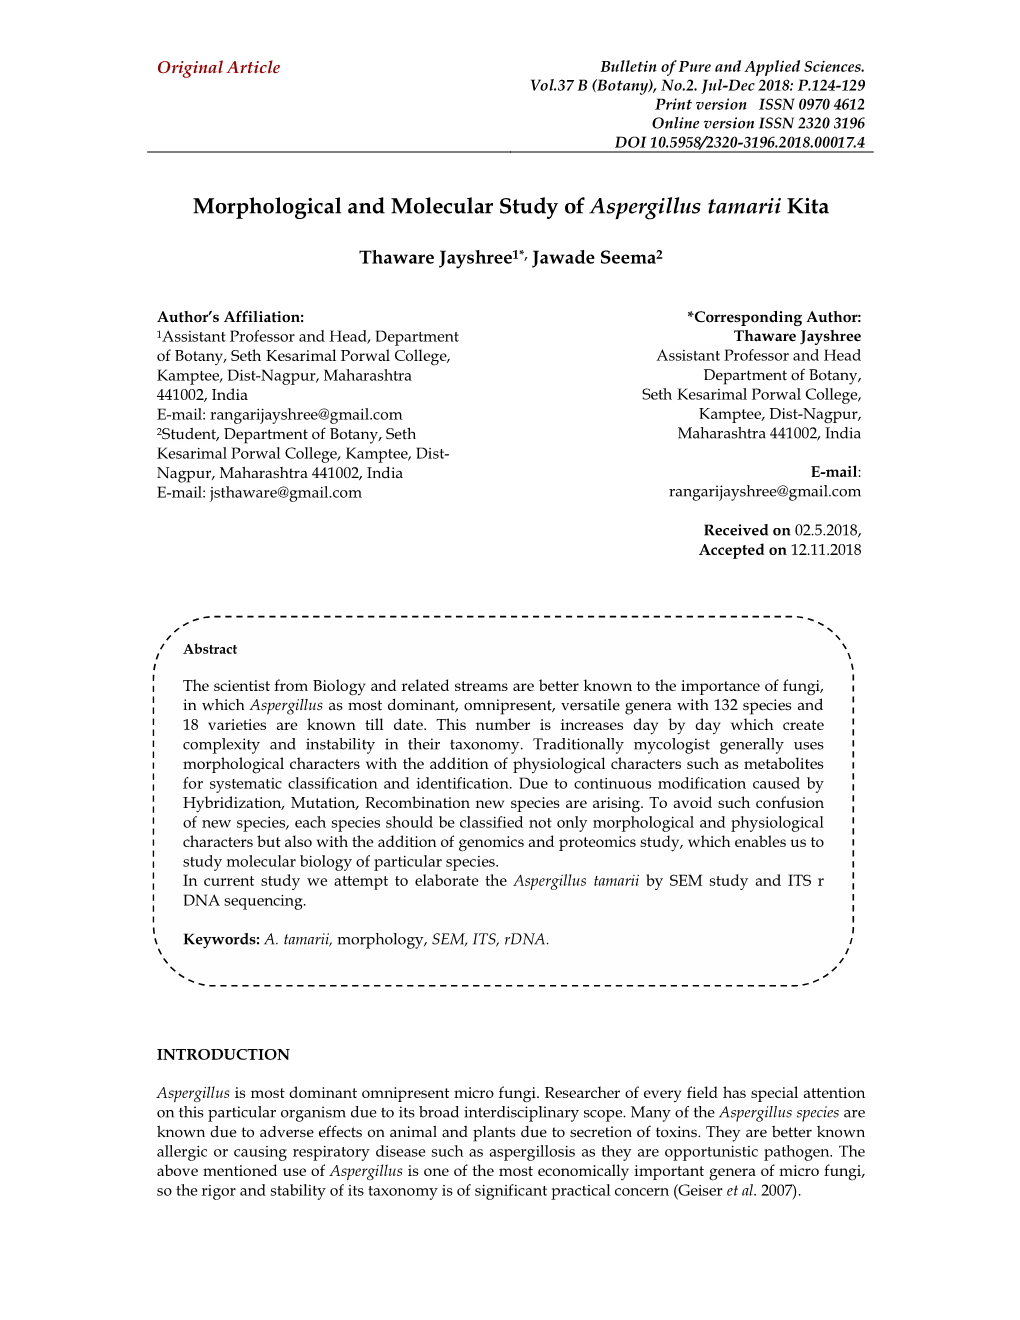 Morphological and Molecular Study of Aspergillus Tamarii Kita